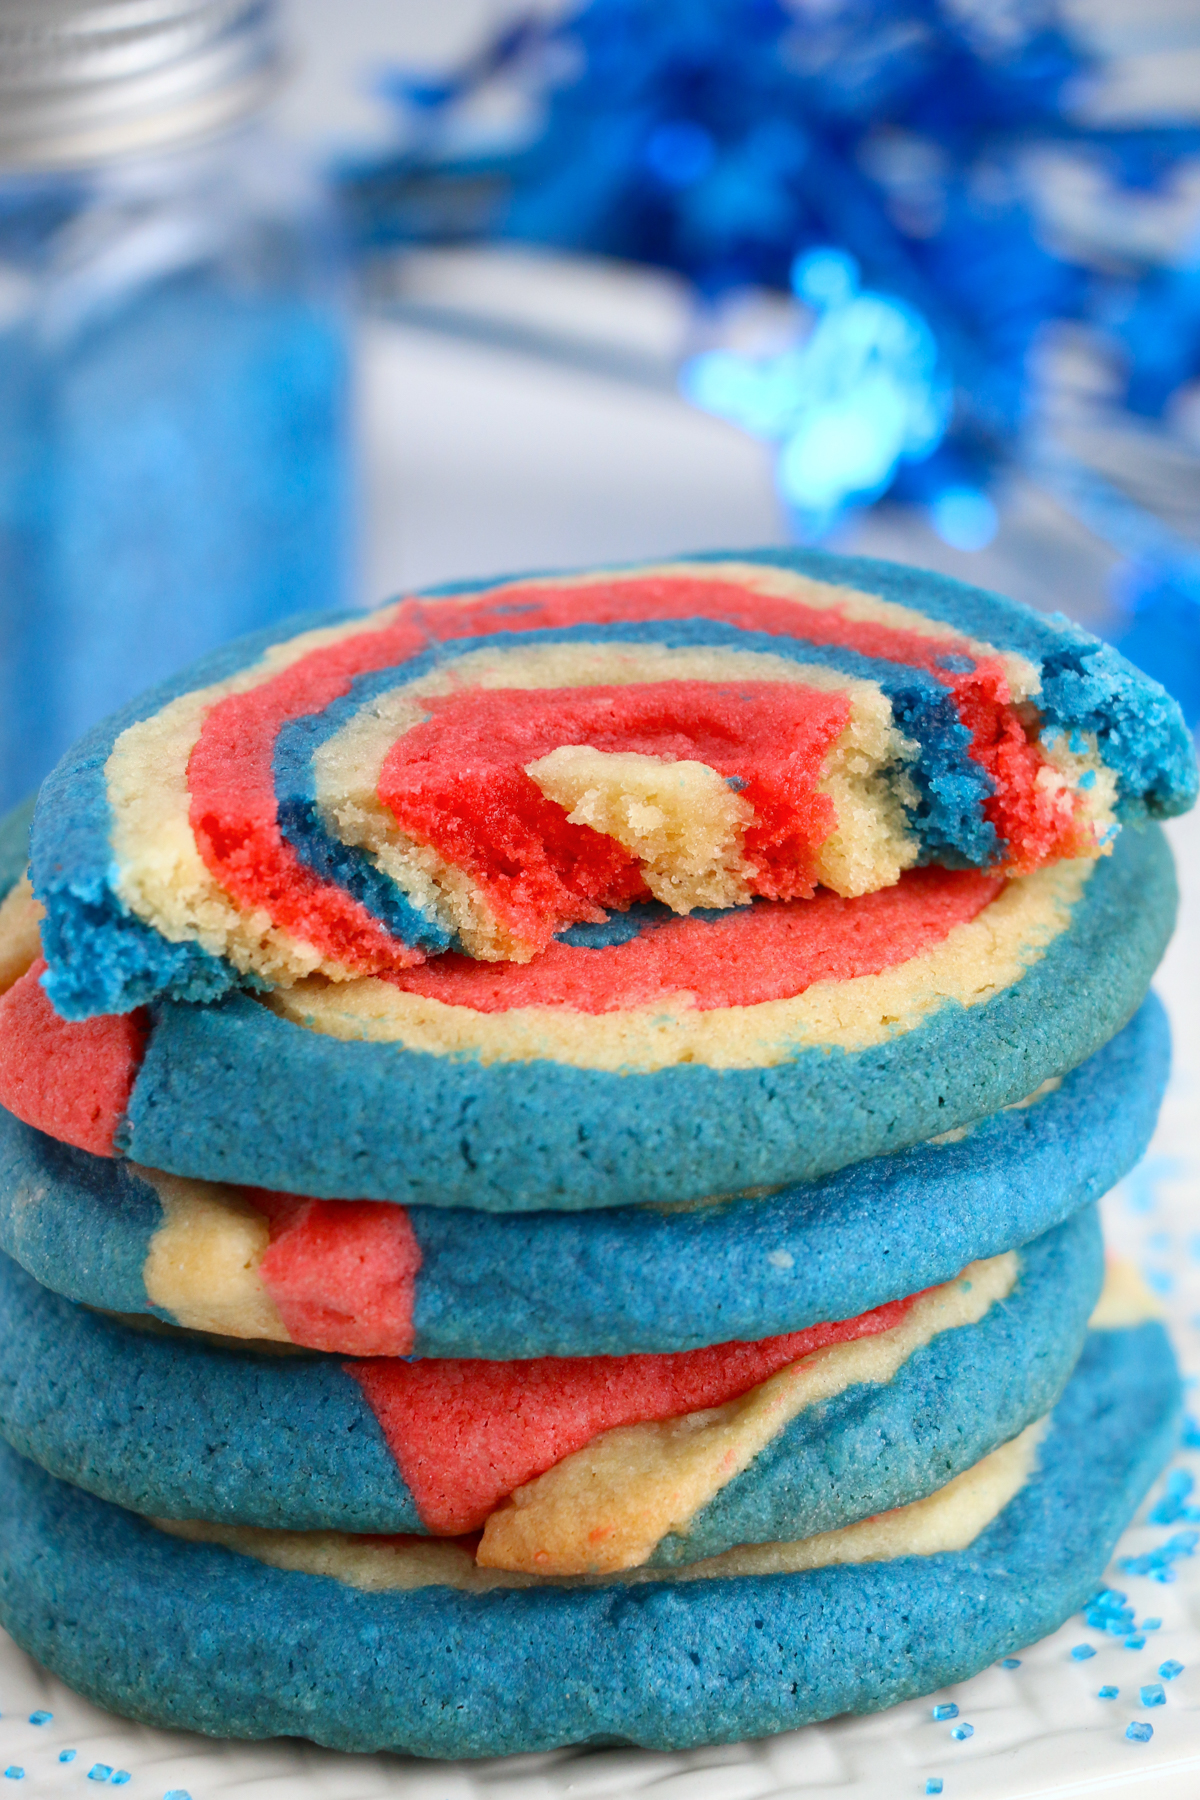 red, white, and blue pinwheel cookie broken in half